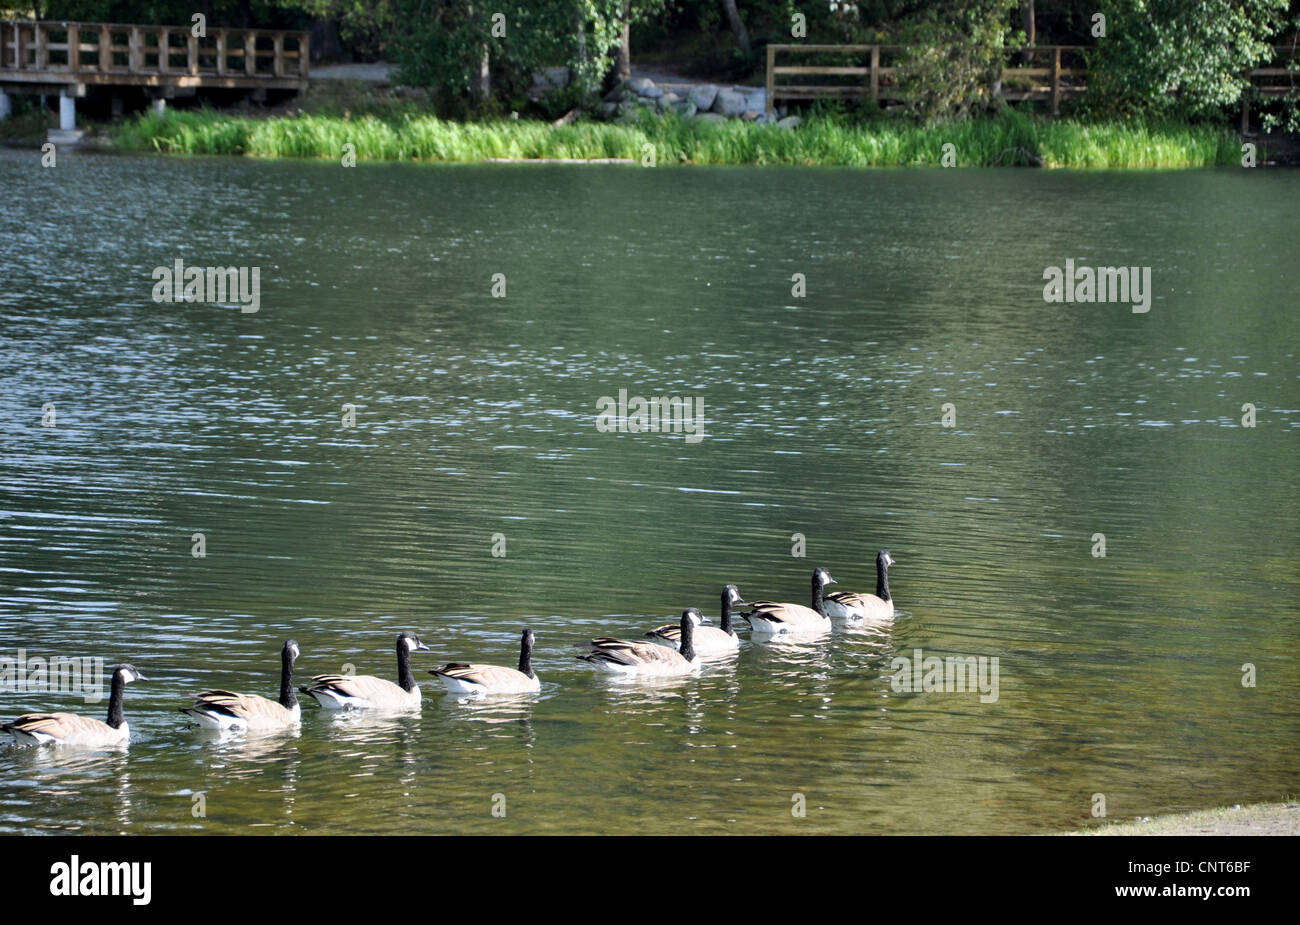 Wild ducks swiming in the lake Stock Photo